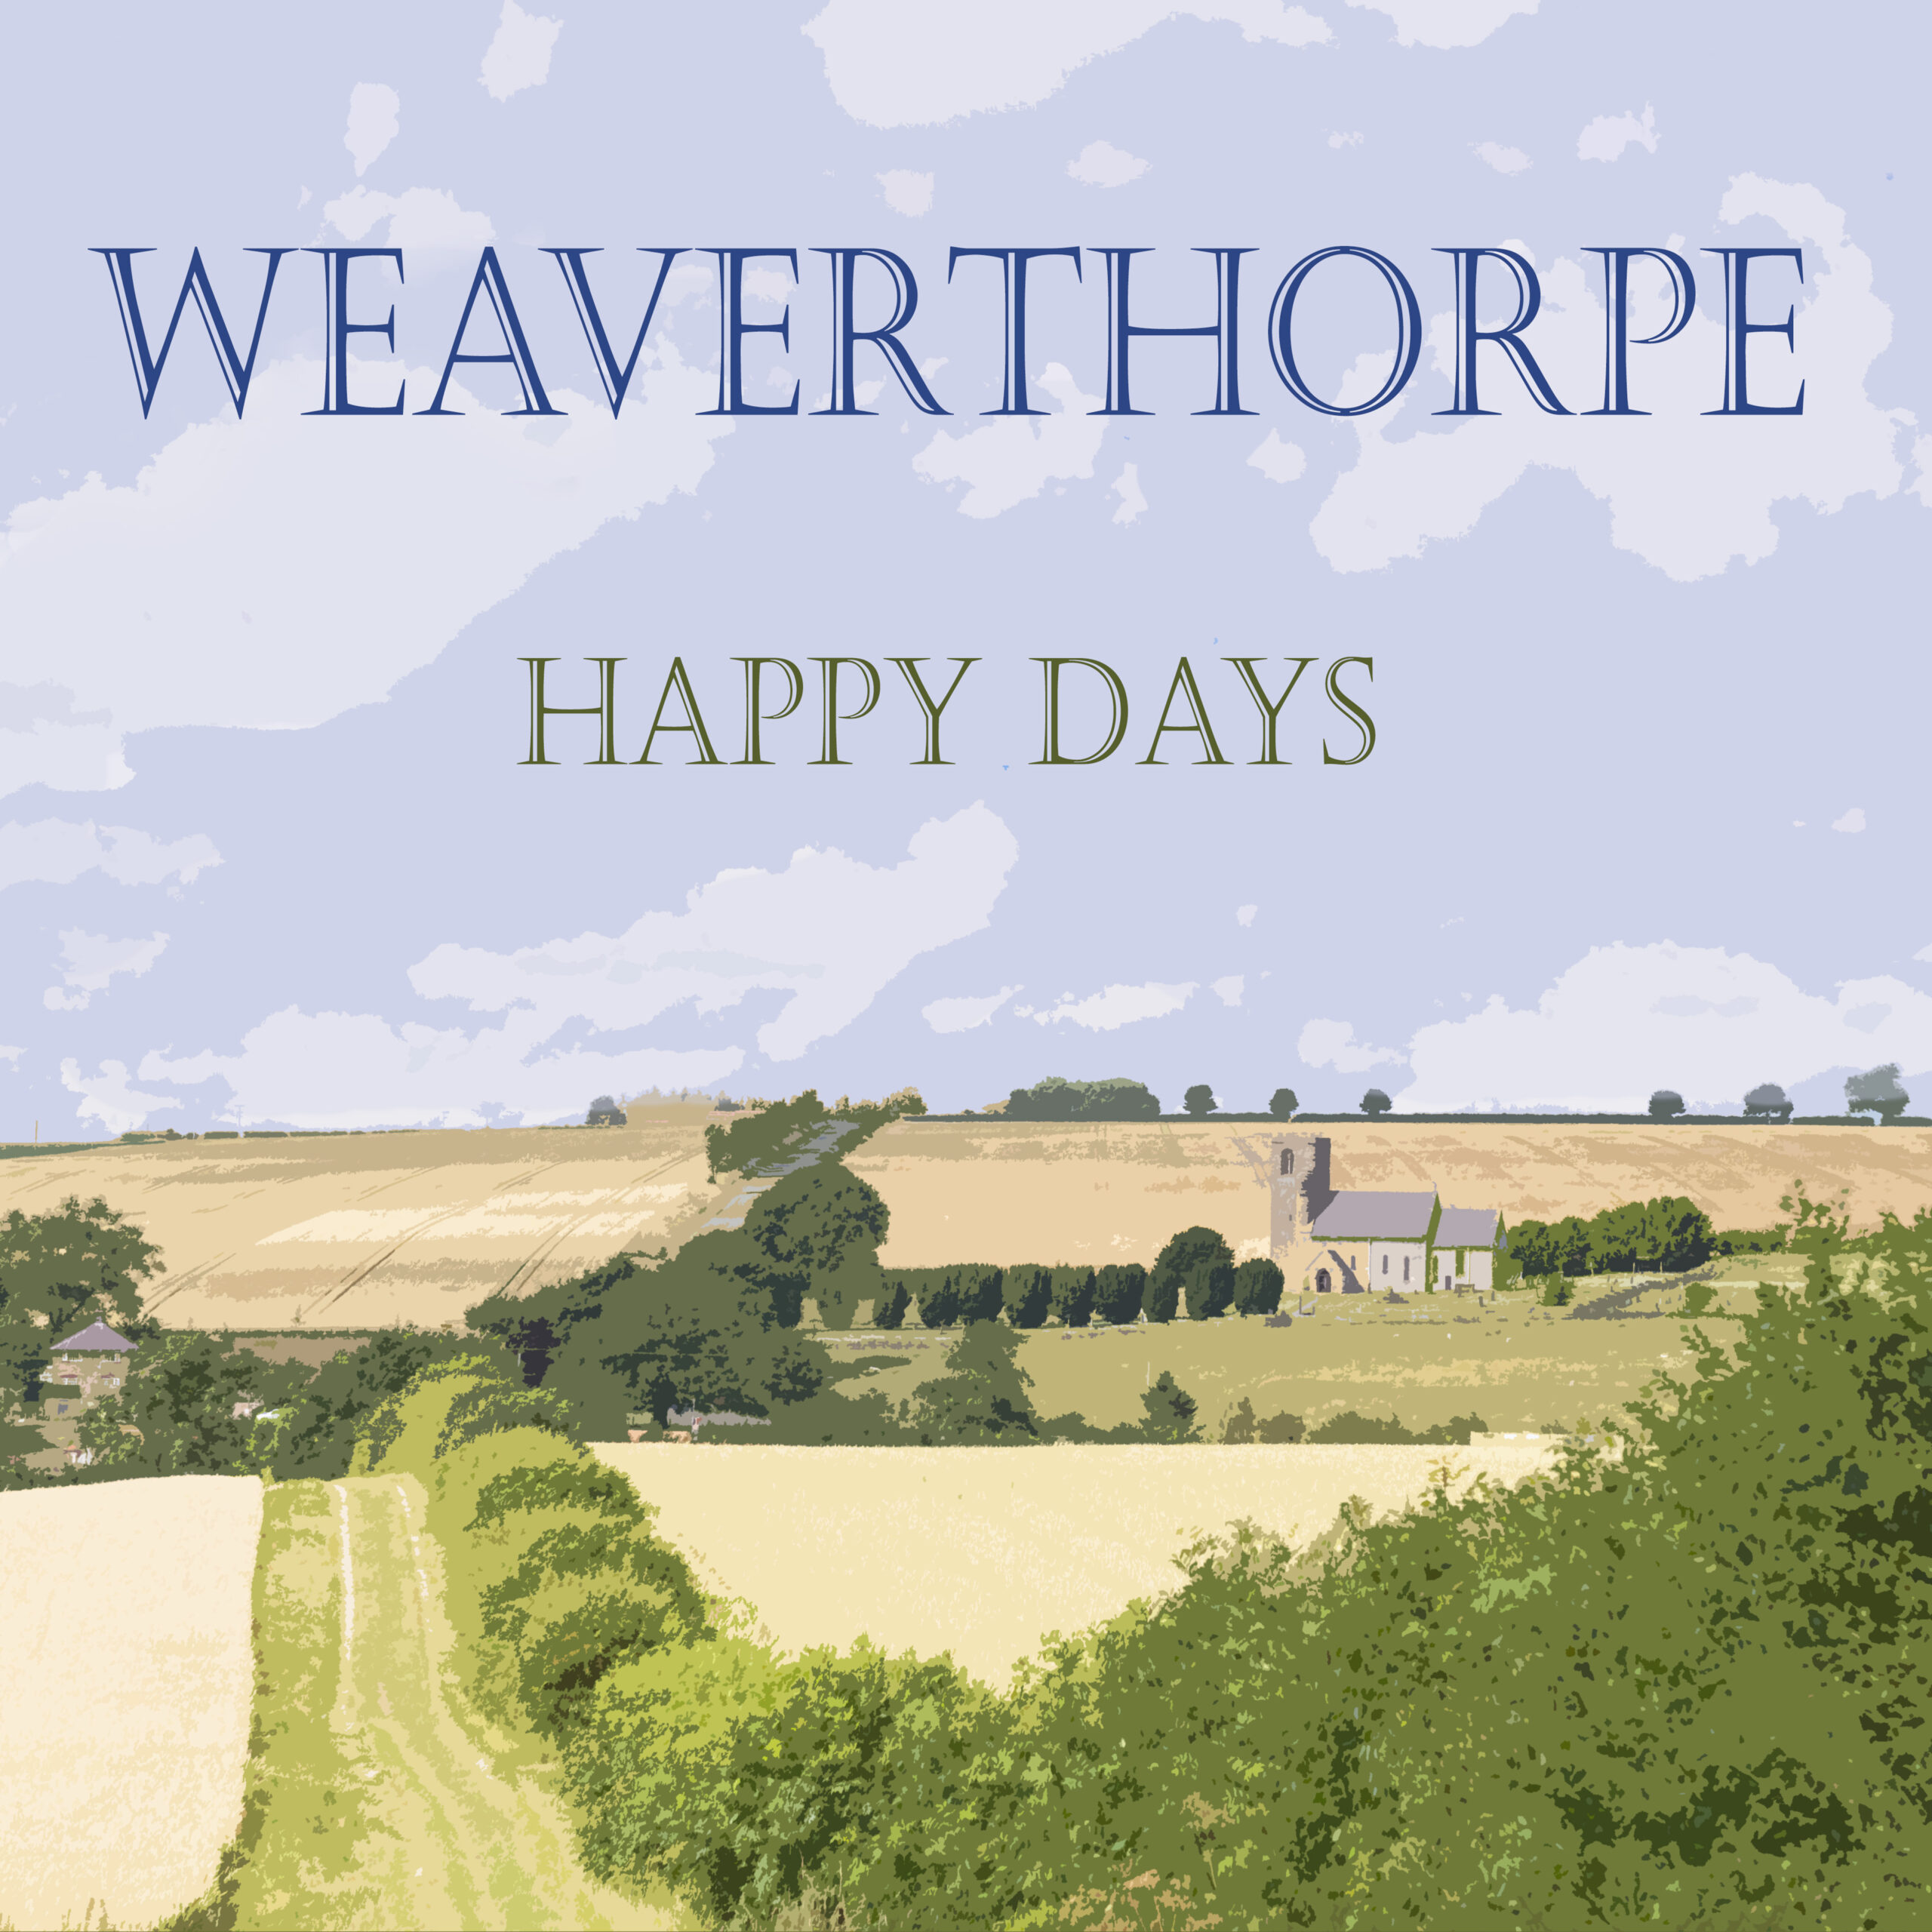 Weaverthorpe's rolling hills